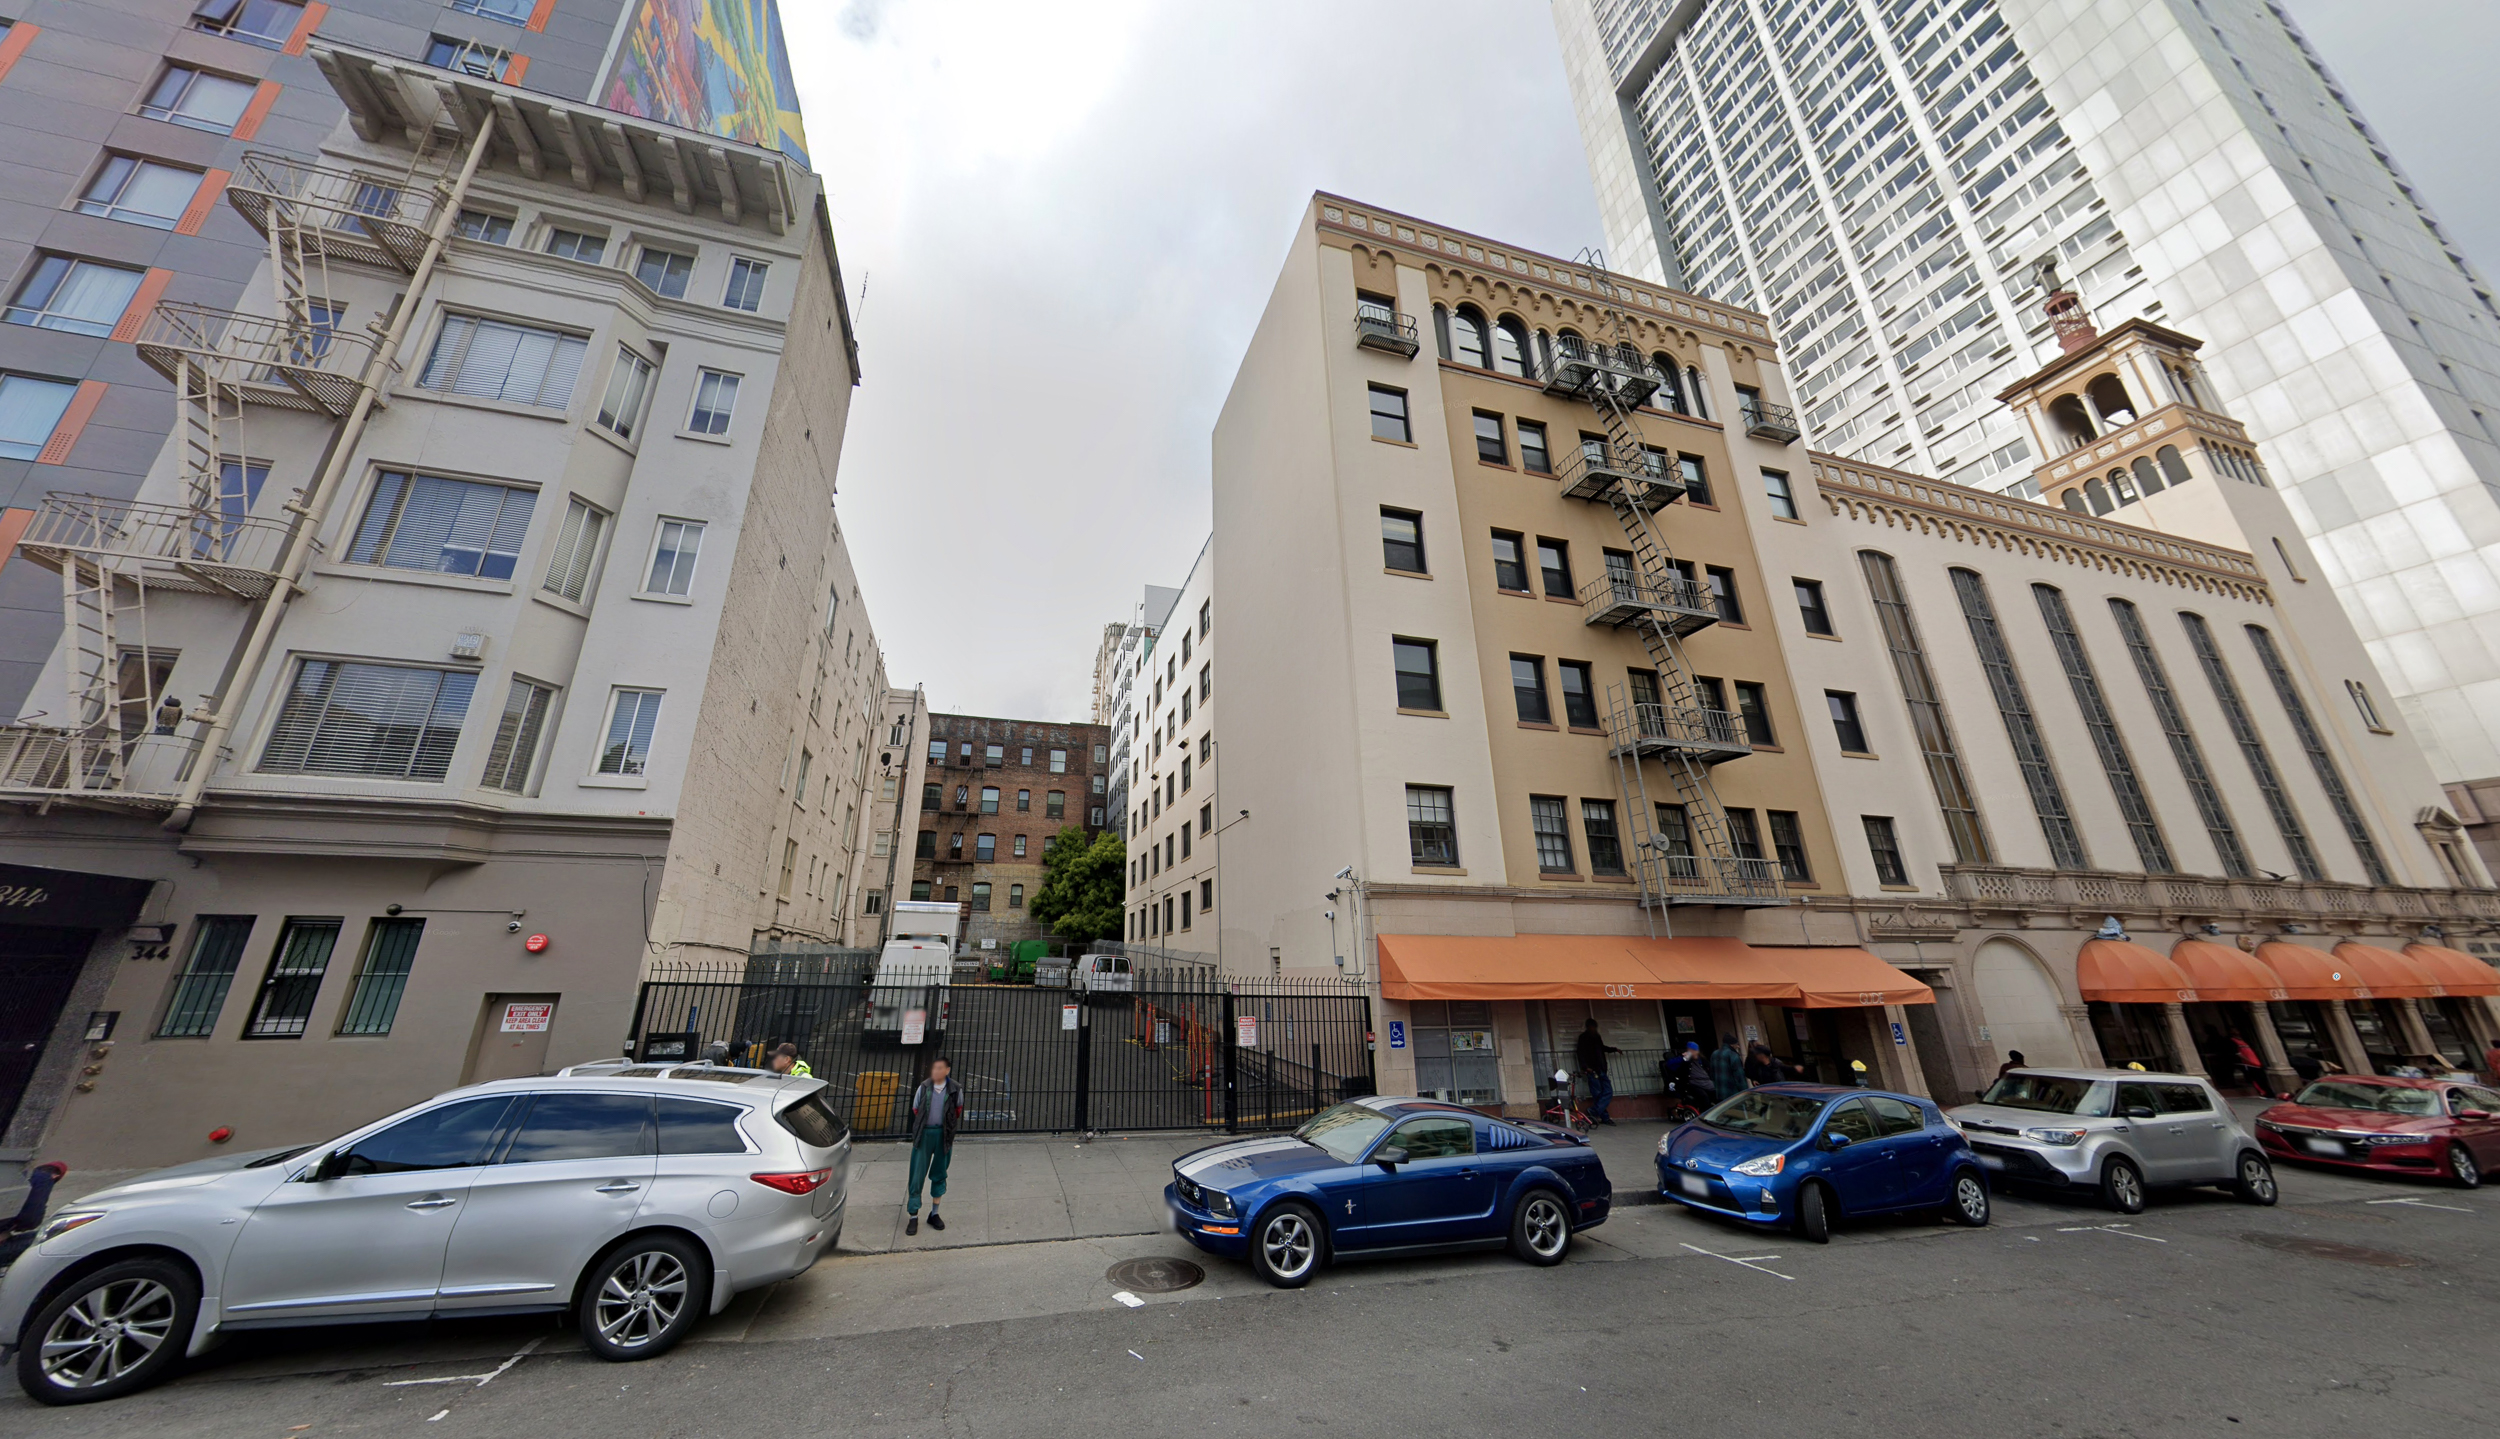 330 and 334 Ellis Street, image via Google Street View